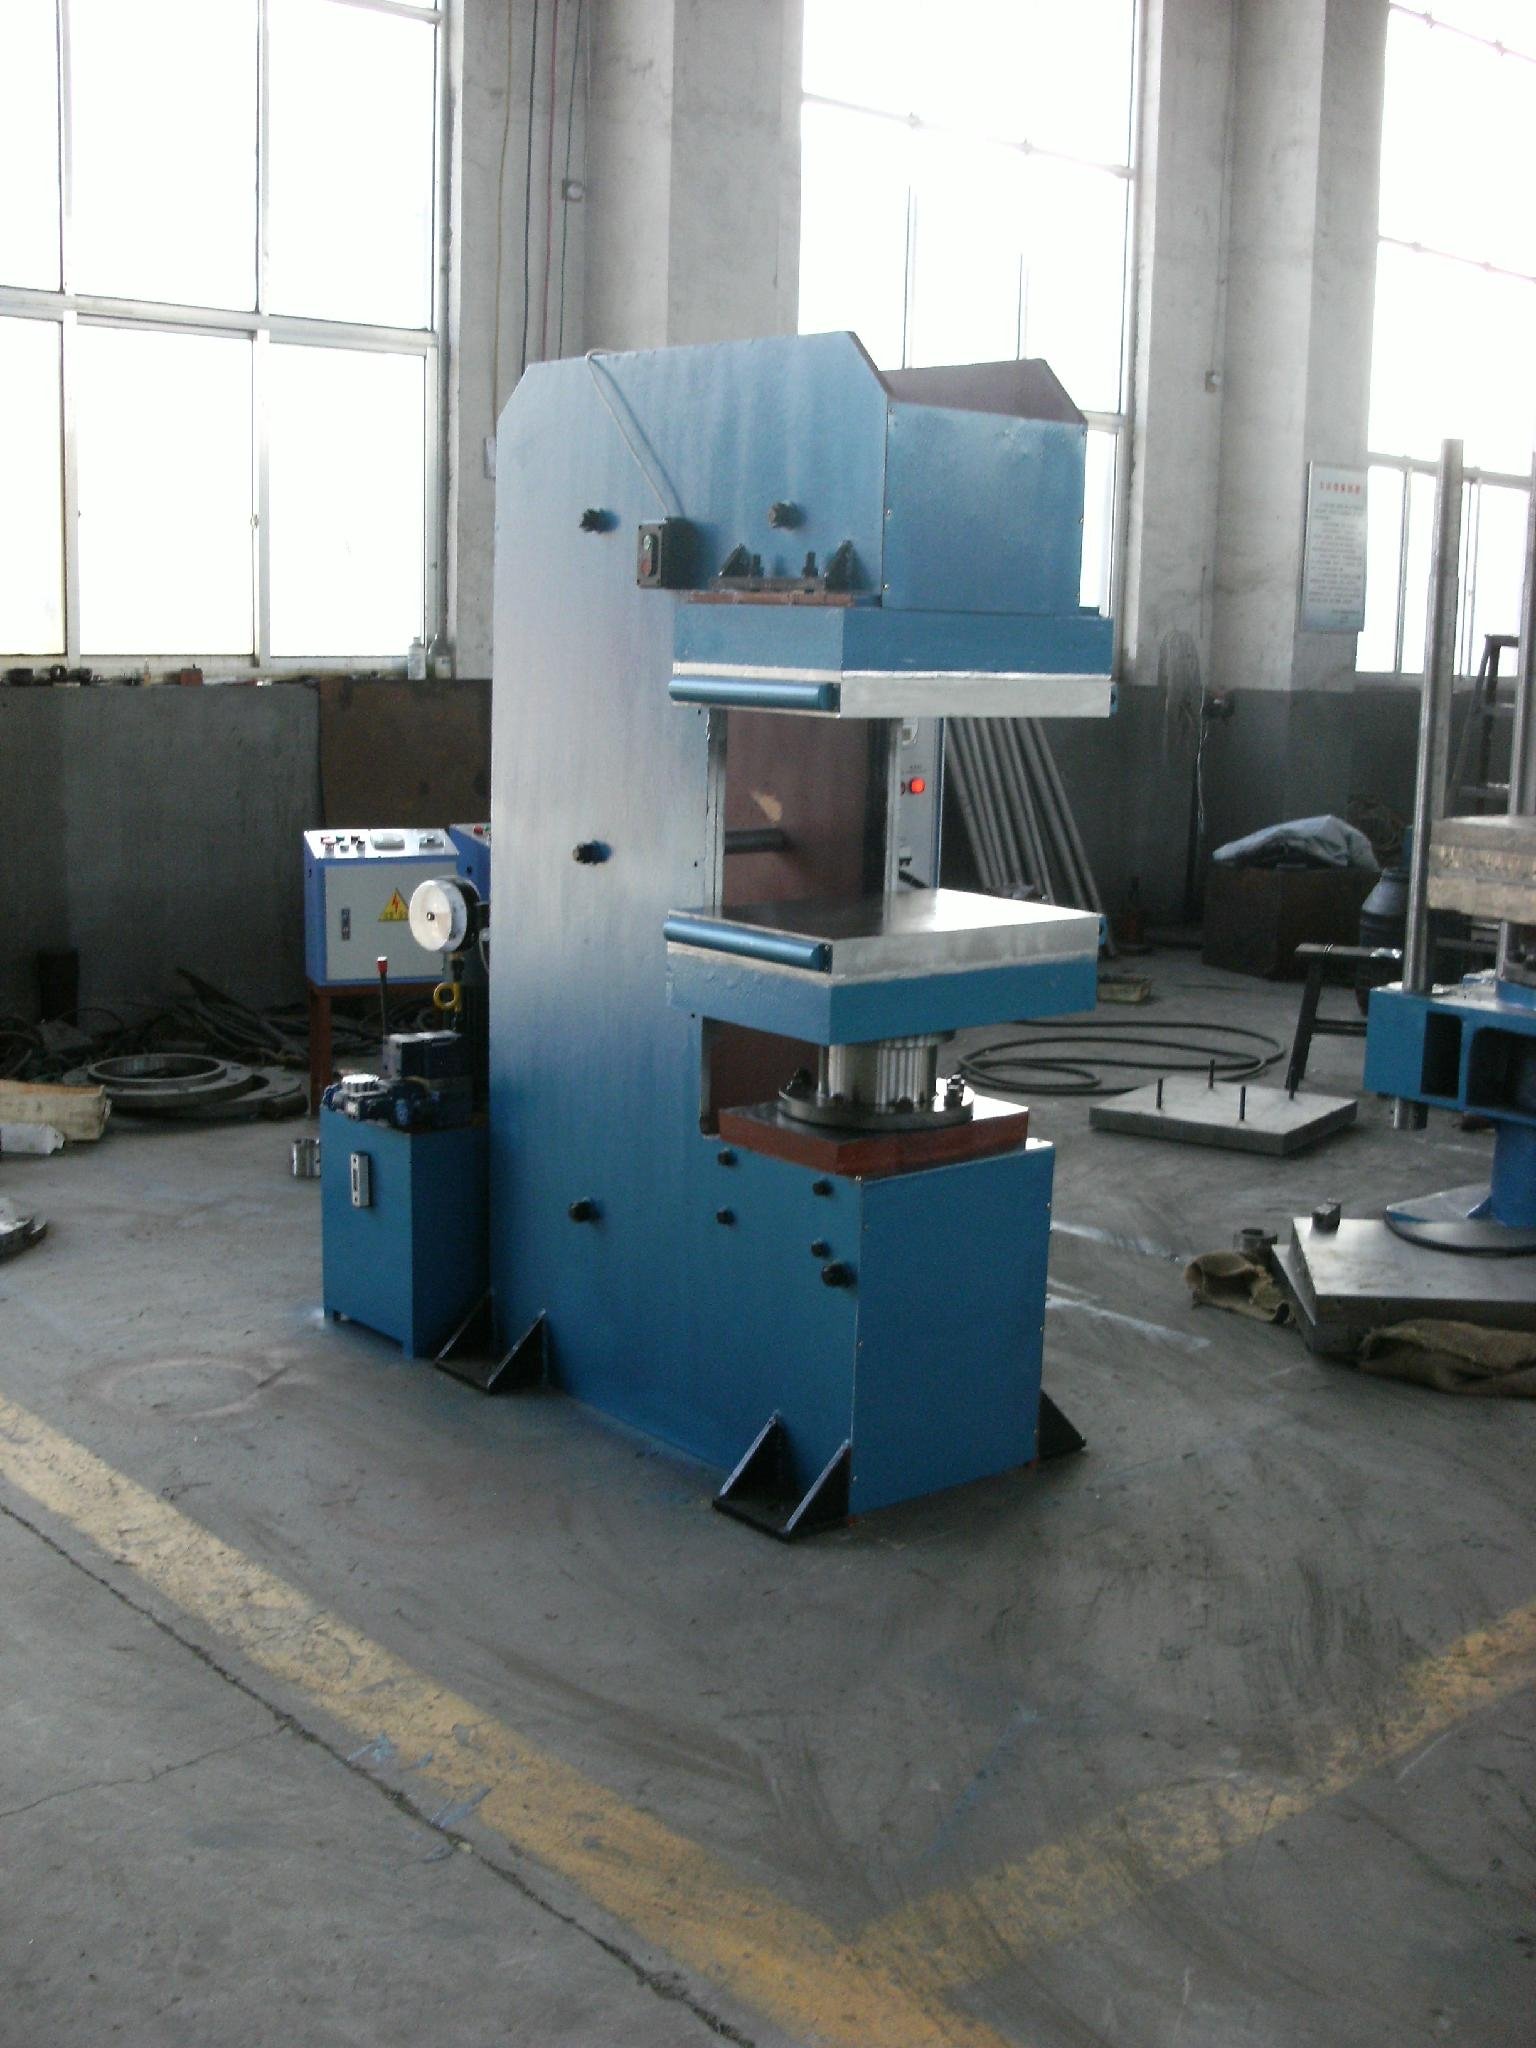 100T rubber hydraulic press vulcanizing machine in qingdao price negotiable 3